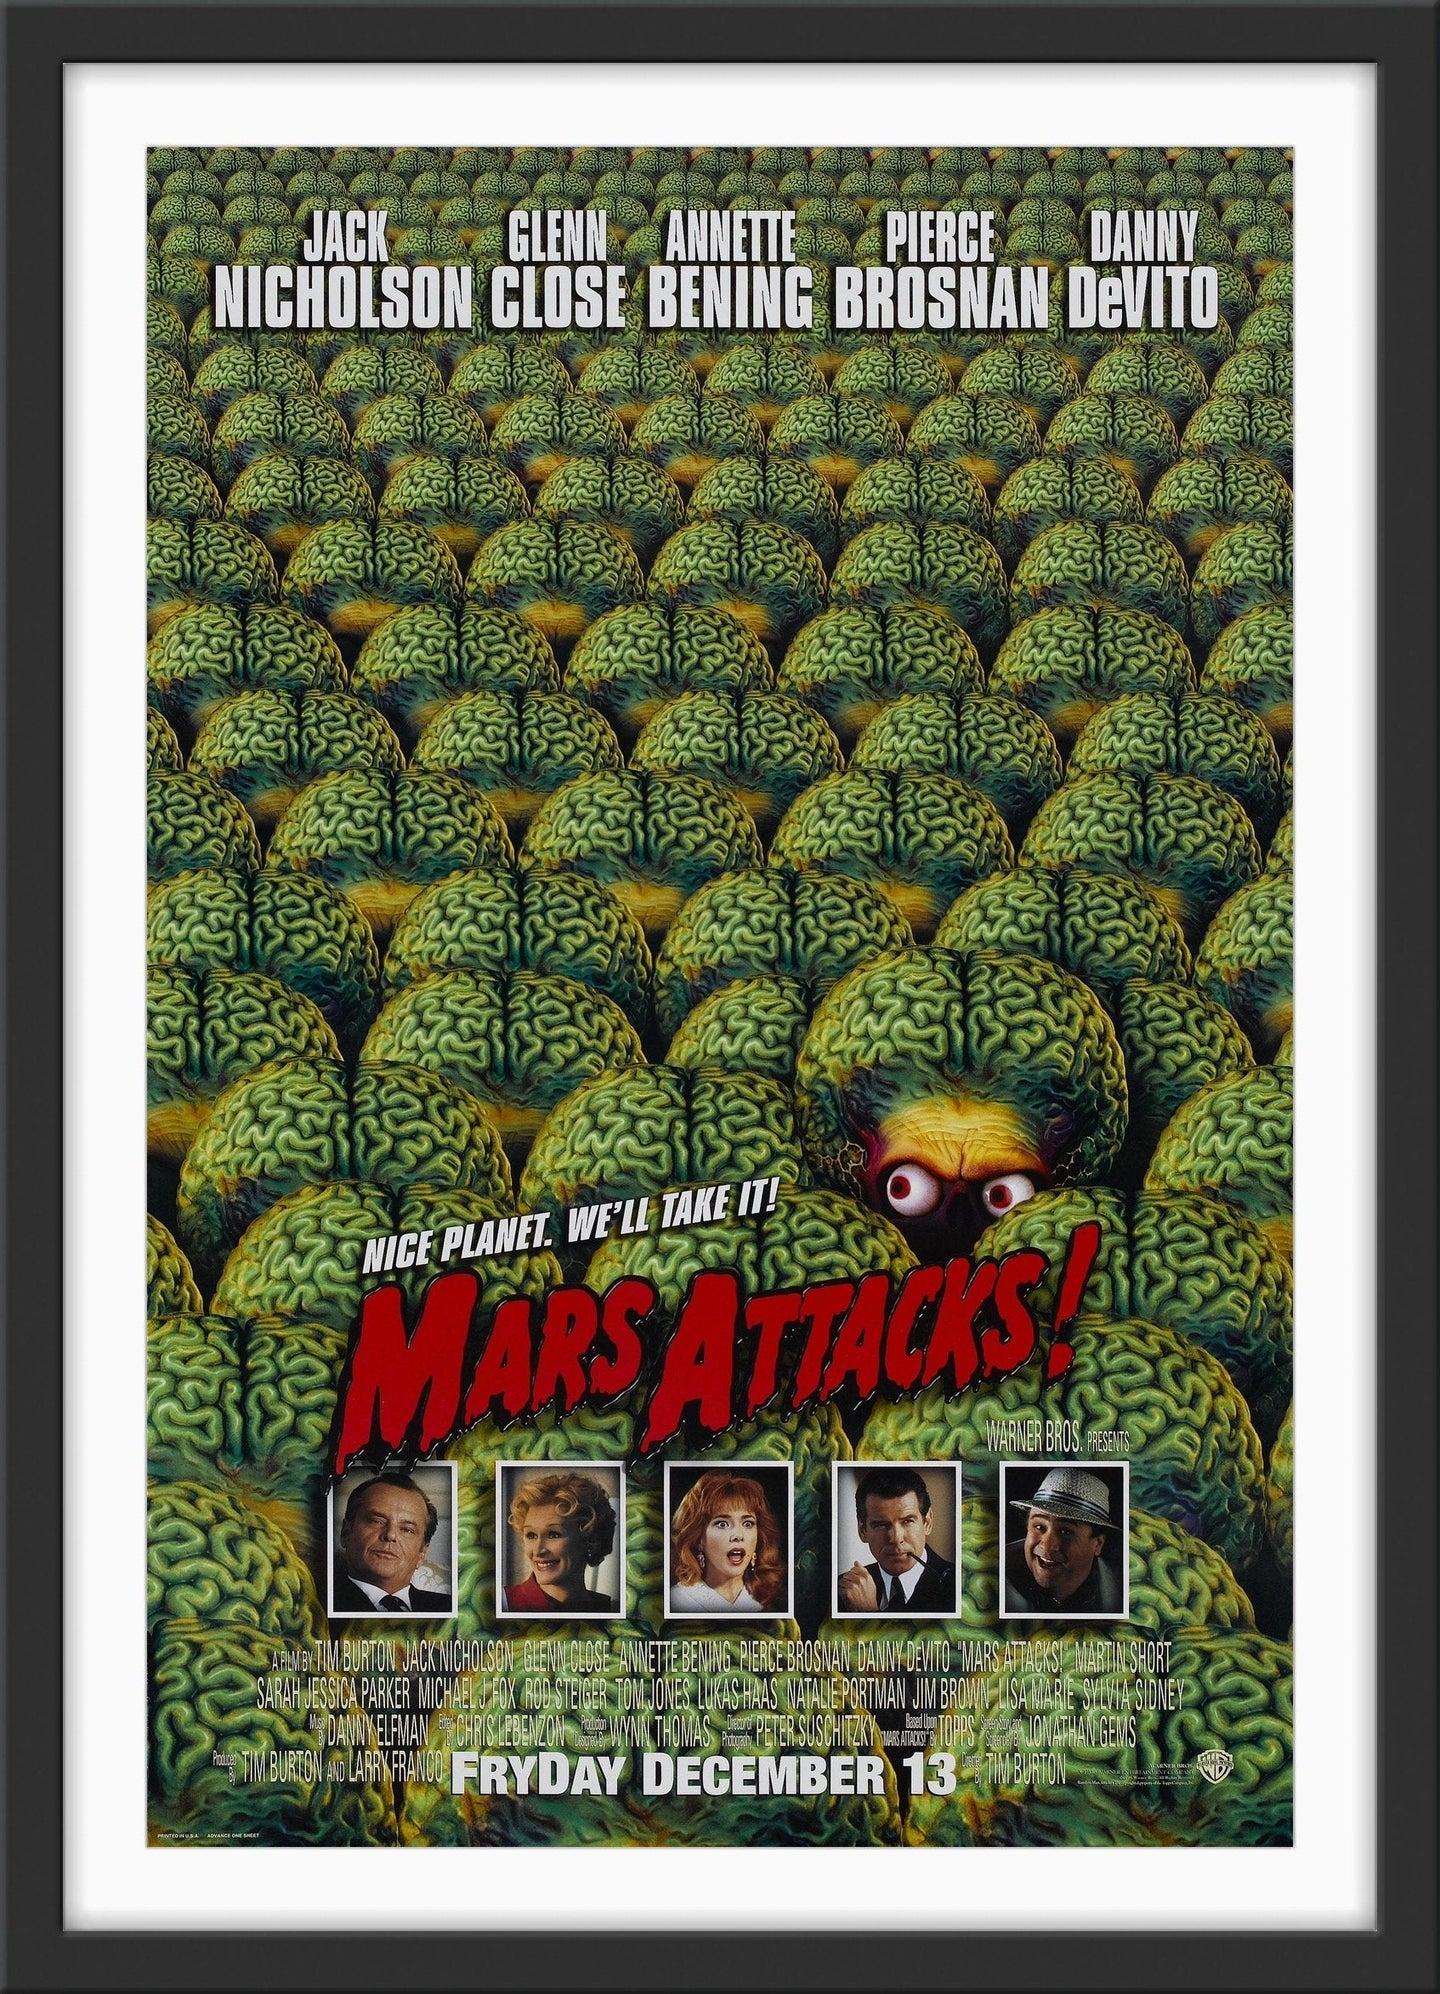 An original movie poster for the Tim Burton film Mars Attacks!